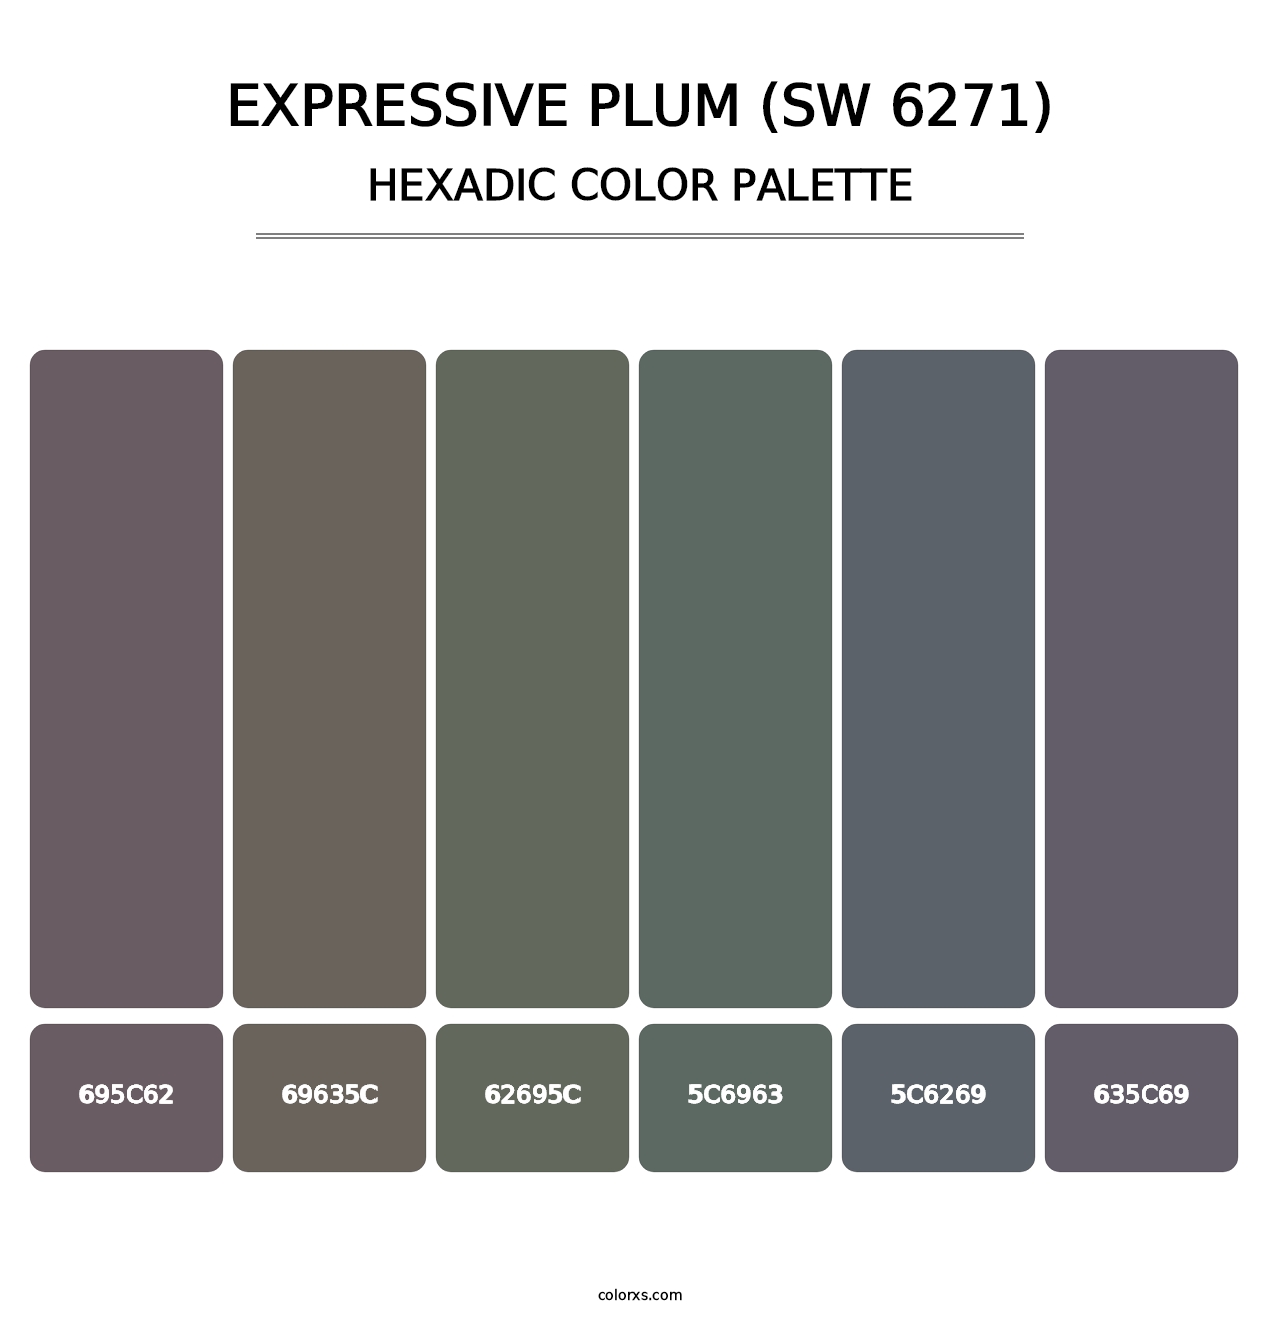 Expressive Plum (SW 6271) - Hexadic Color Palette